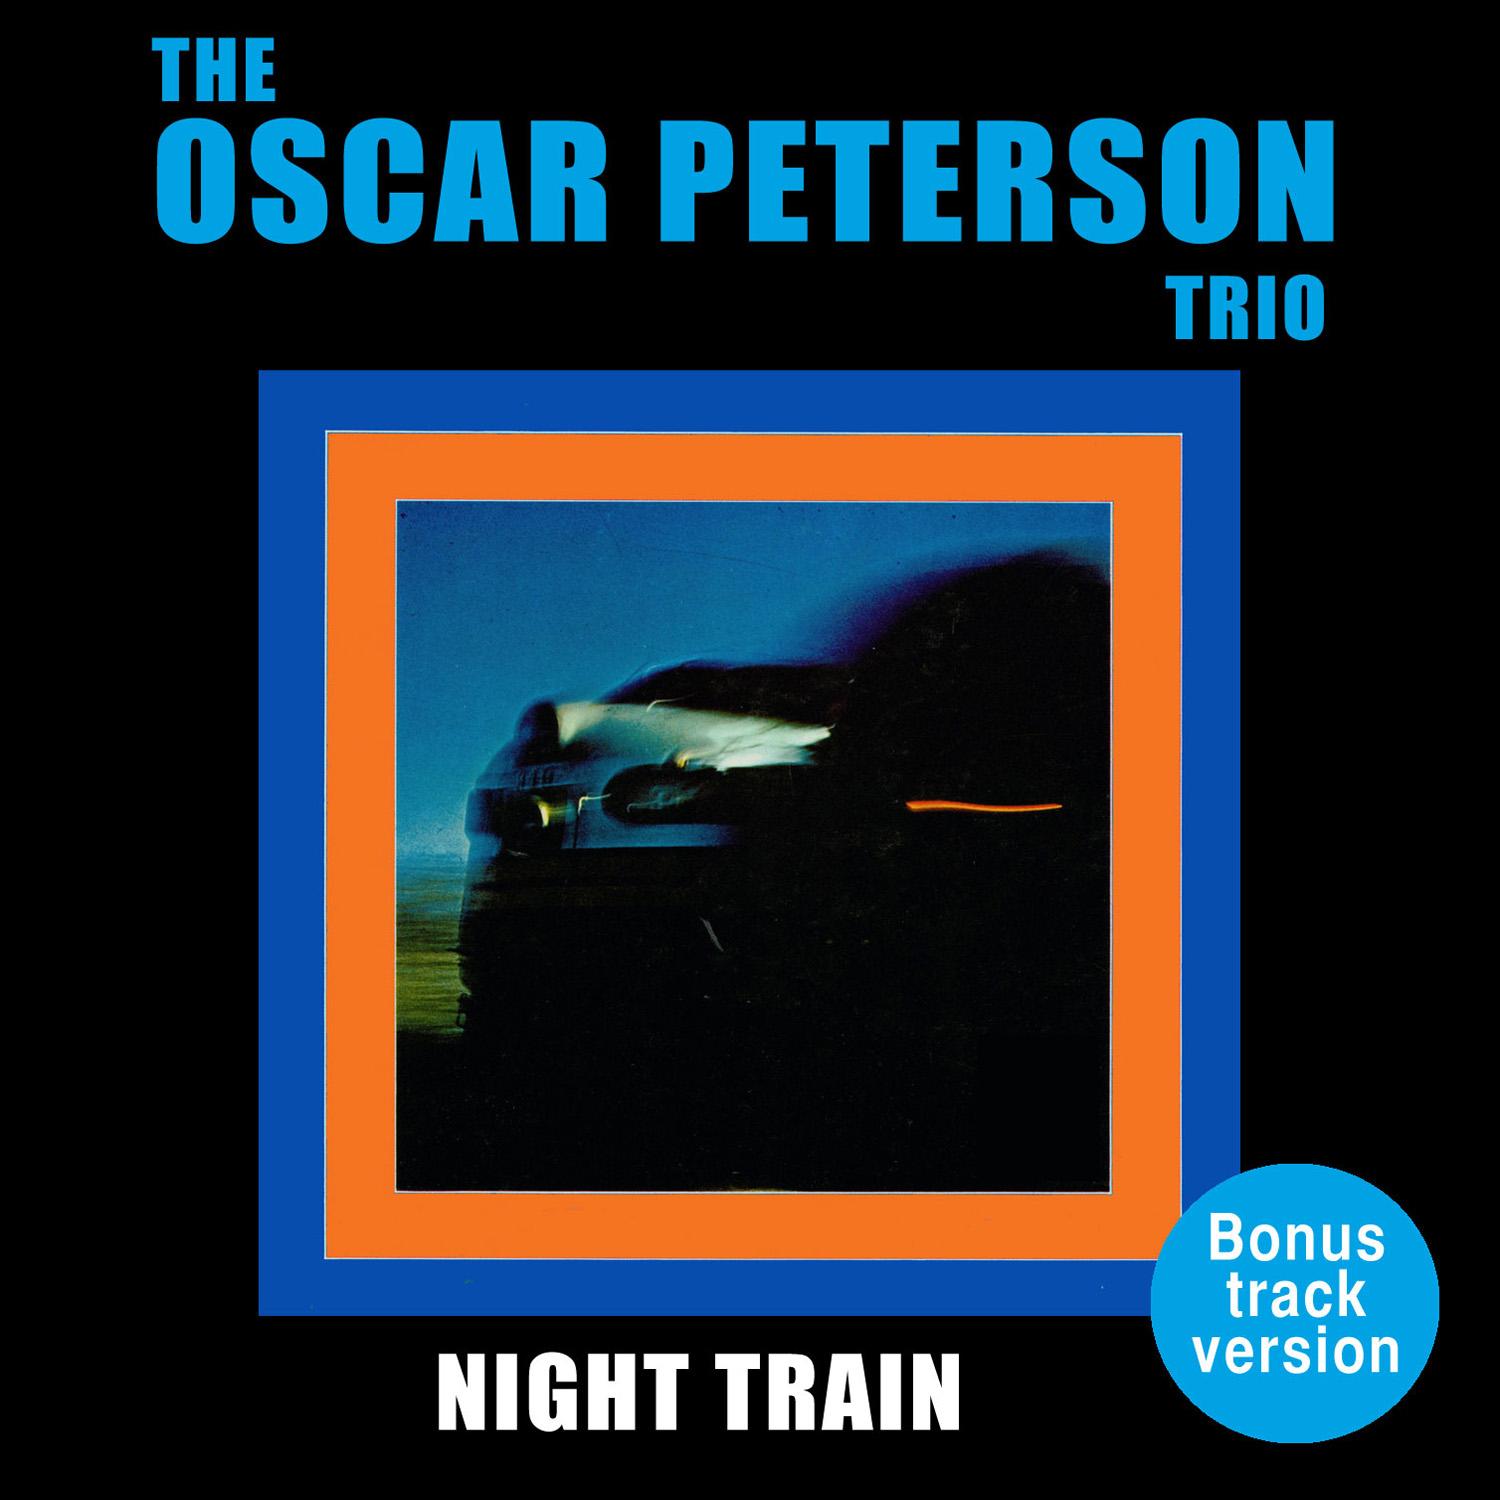 The Oscar Peterson Trio: Night Train (Bonus Track Version)